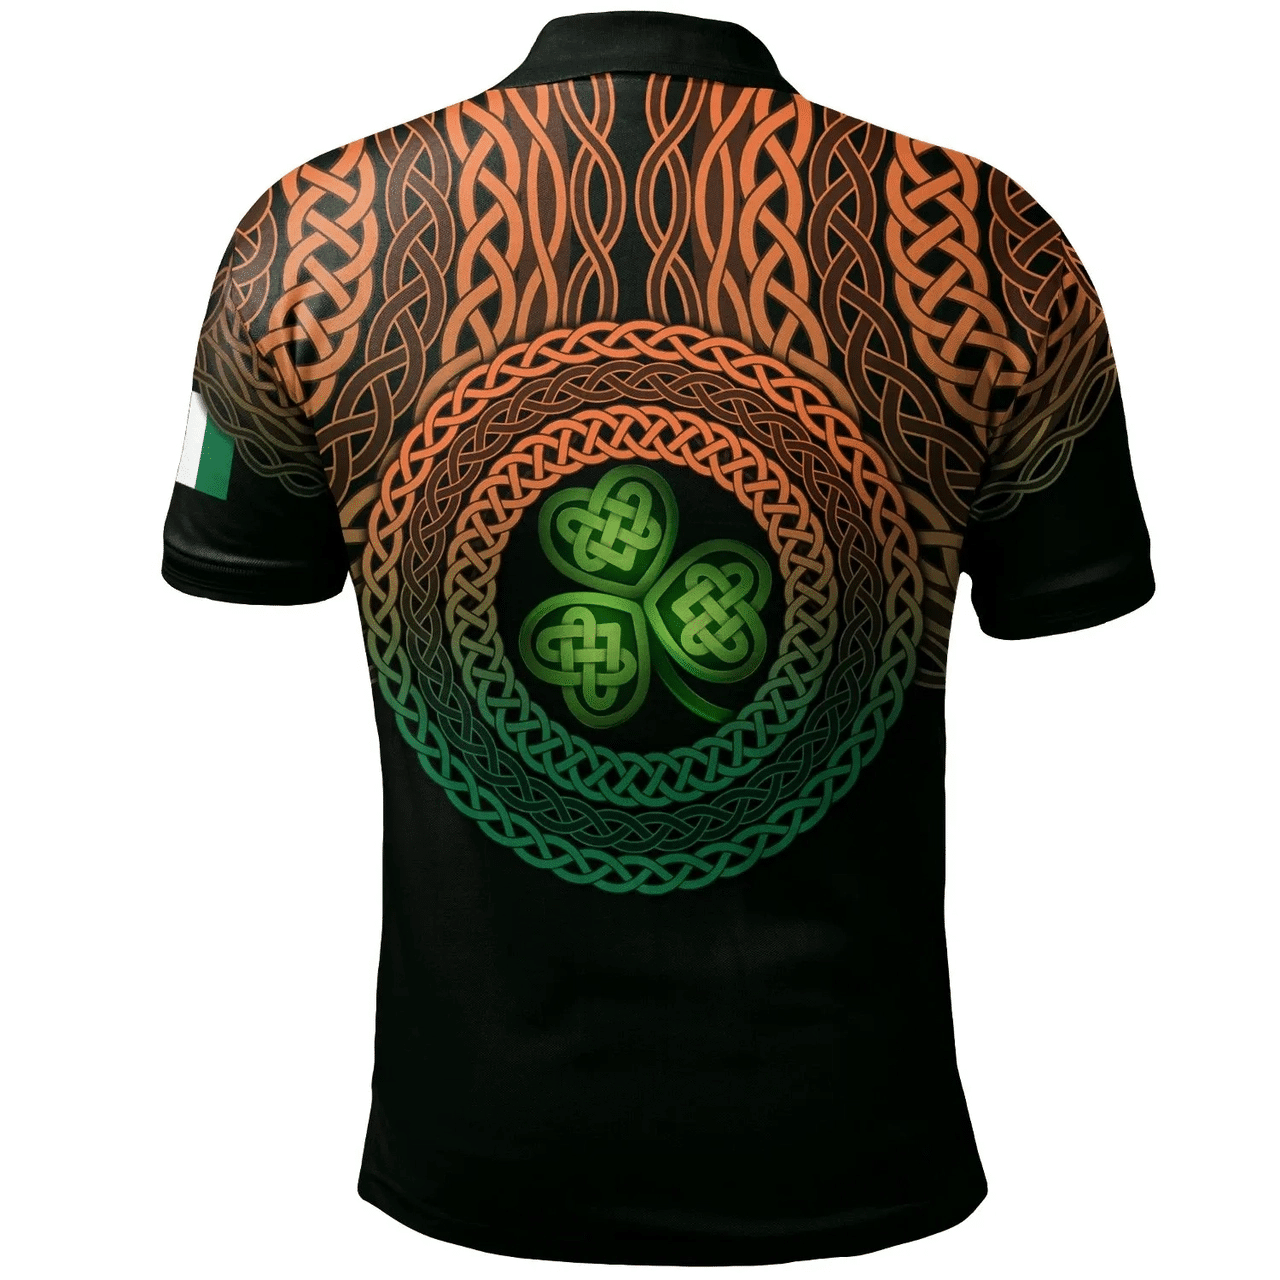 1stIreland Ireland Polo Shirt - Kerrigan or O'Kerrigan Irish Family Crest Polo Shirt - Celtic Pride A7 | 1stIreland.com